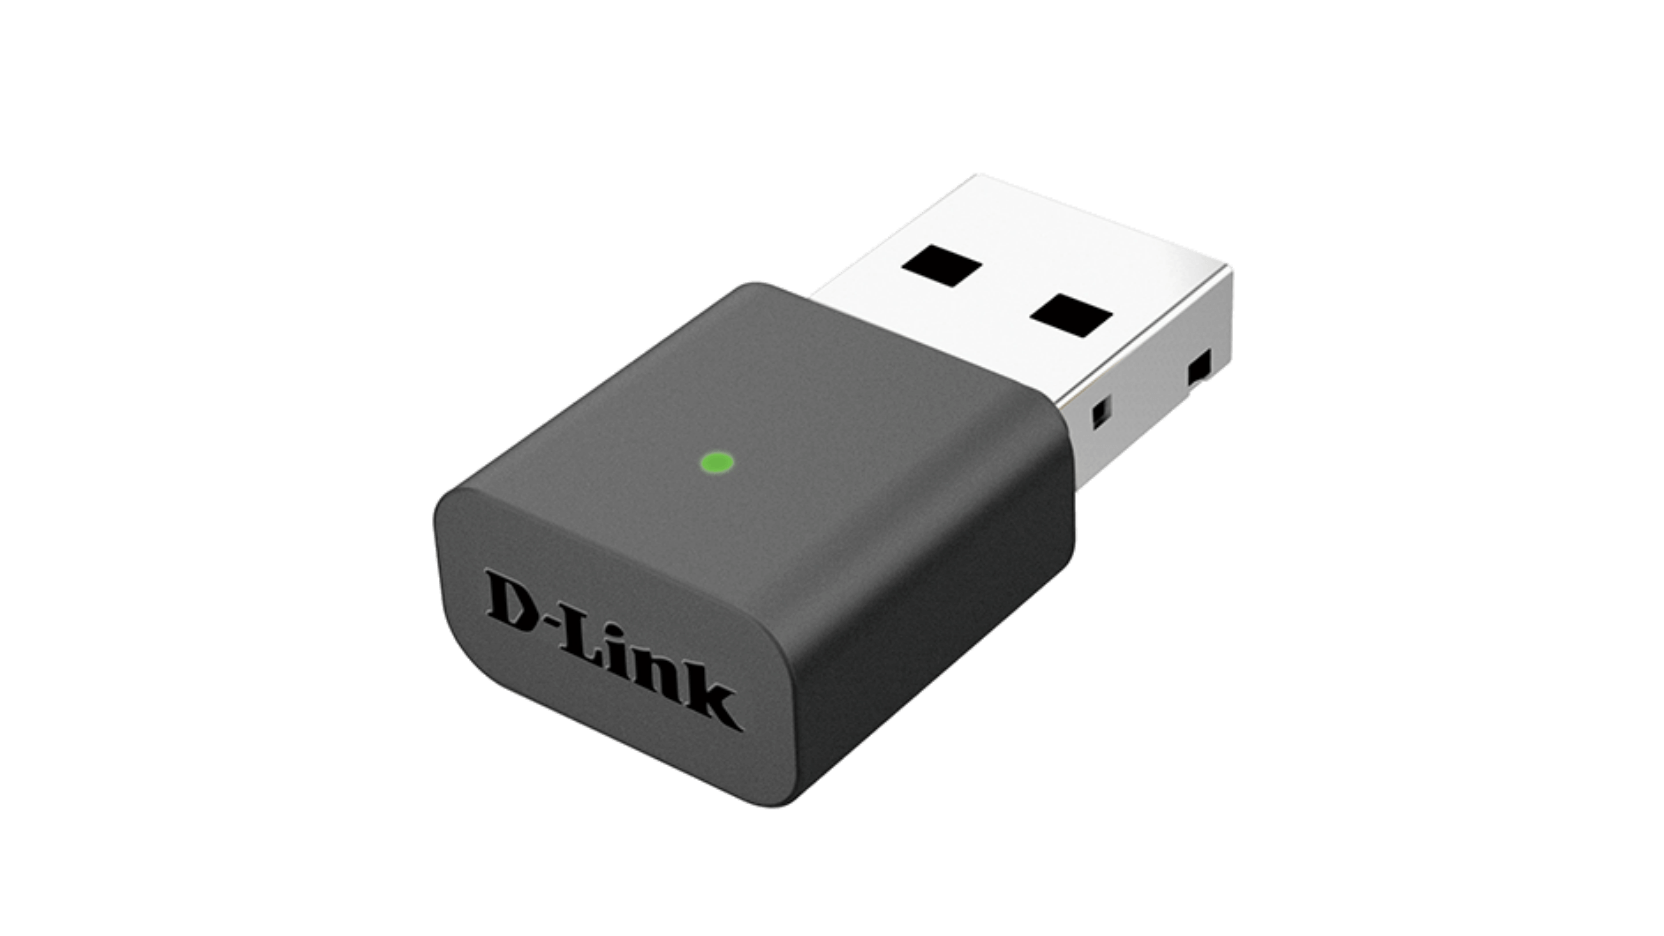 D-LINK USB WIRELESS N 300 NANO (DWA-131)